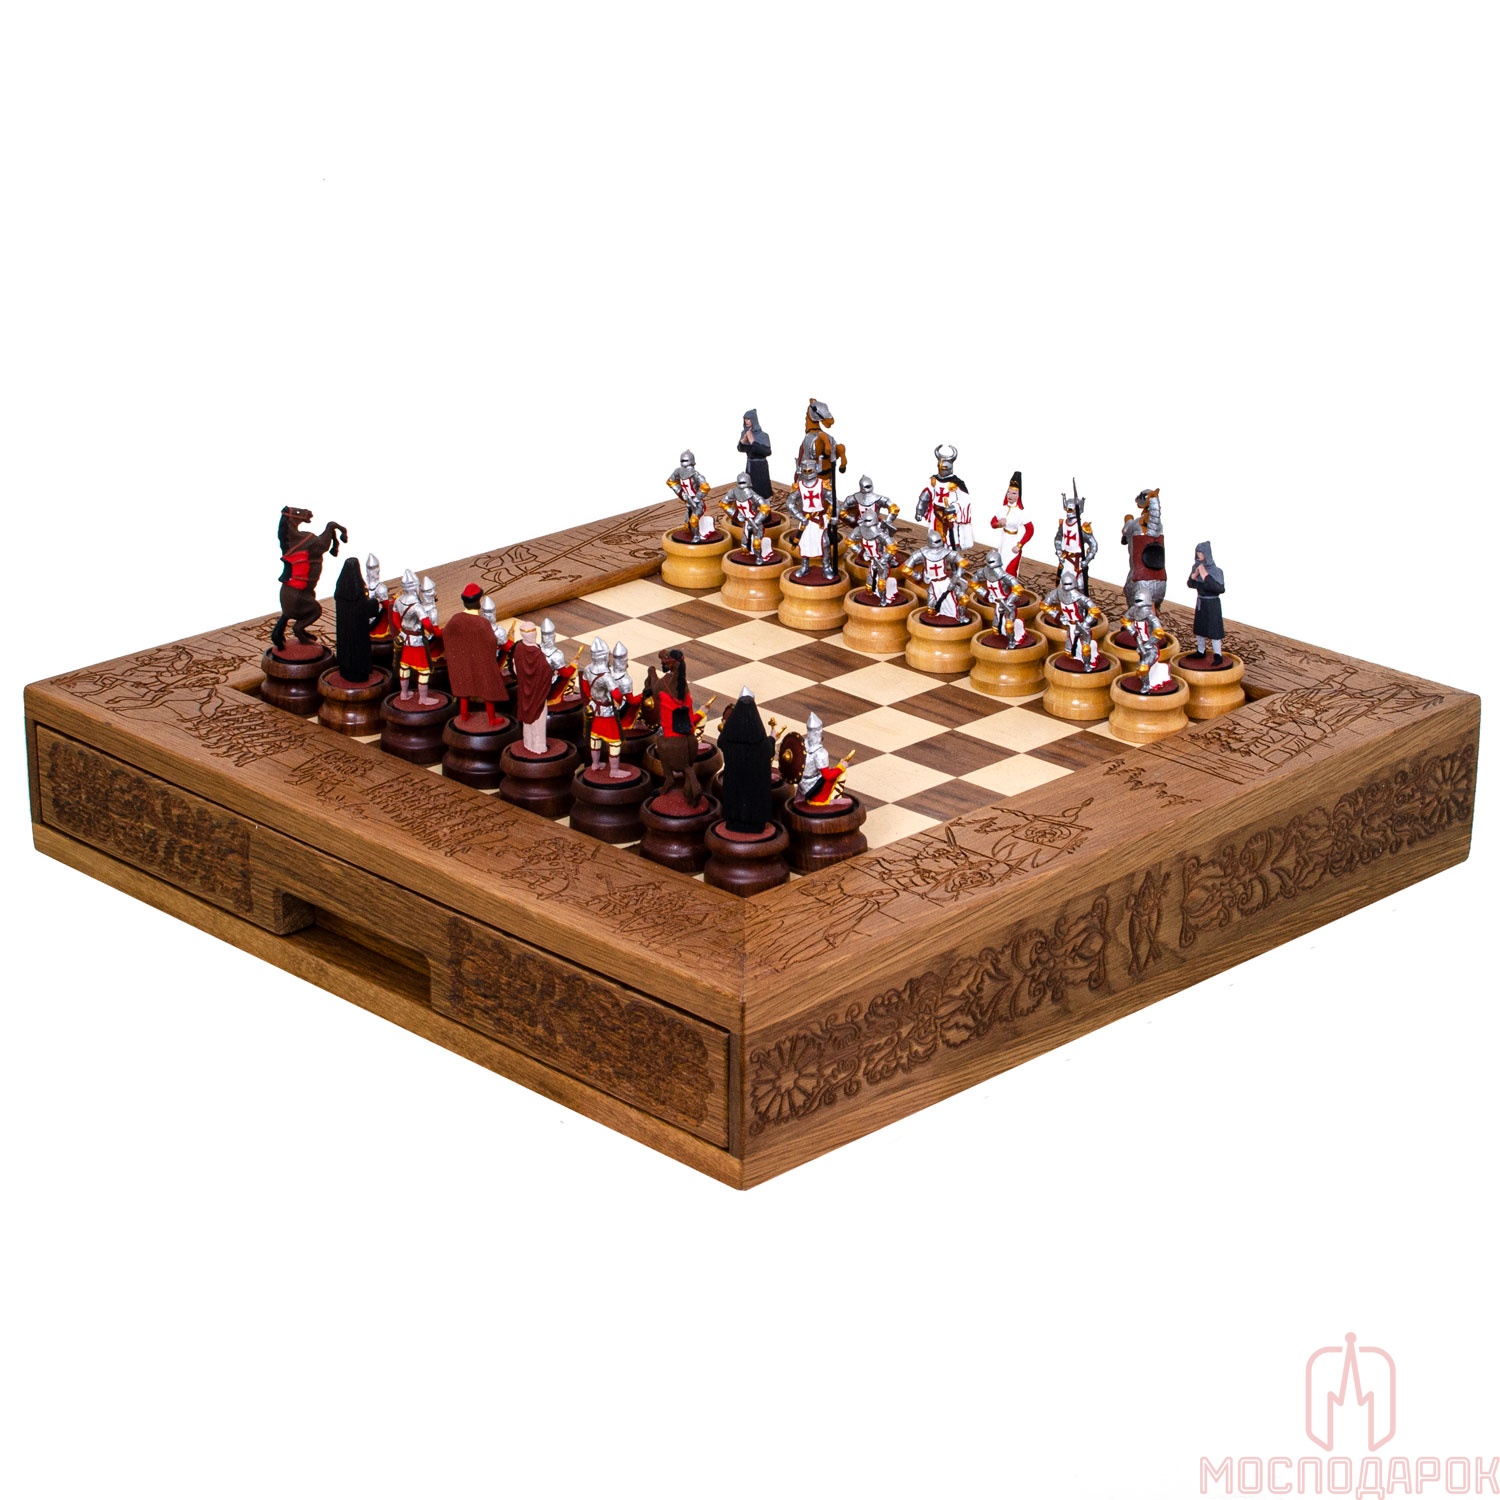 Шахматы "Ледовое побоище" - артикул: RTS54X | Мосподарок 